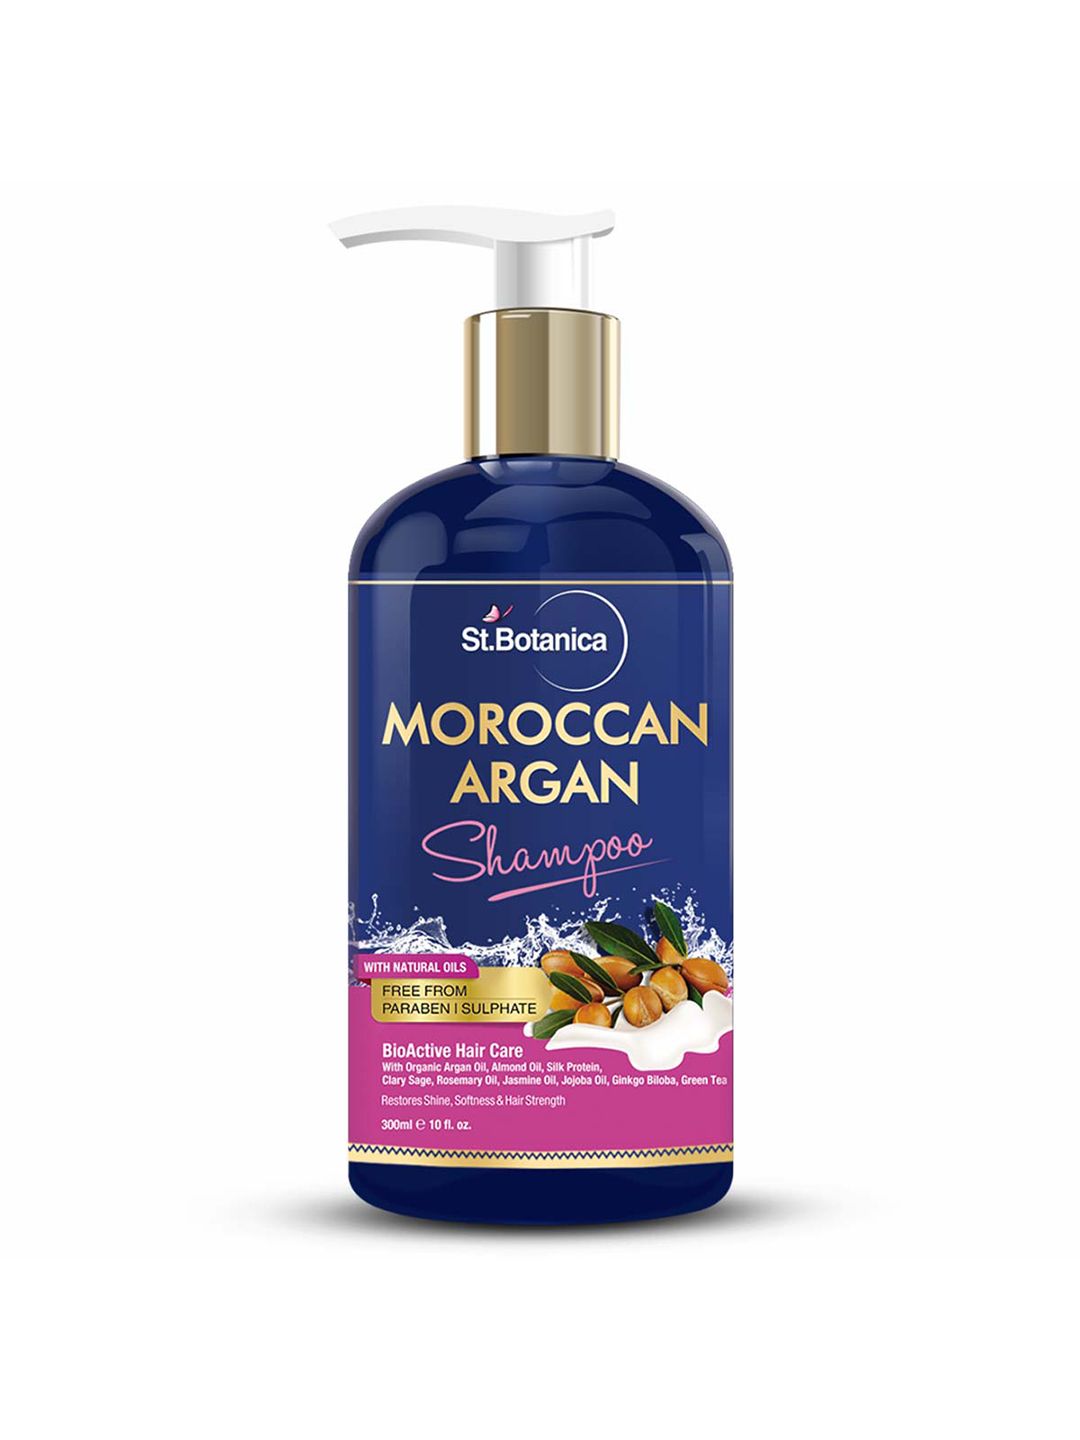 St.Botanica Unisex Moroccan Argan Hair Shampoo 300ml Price in India